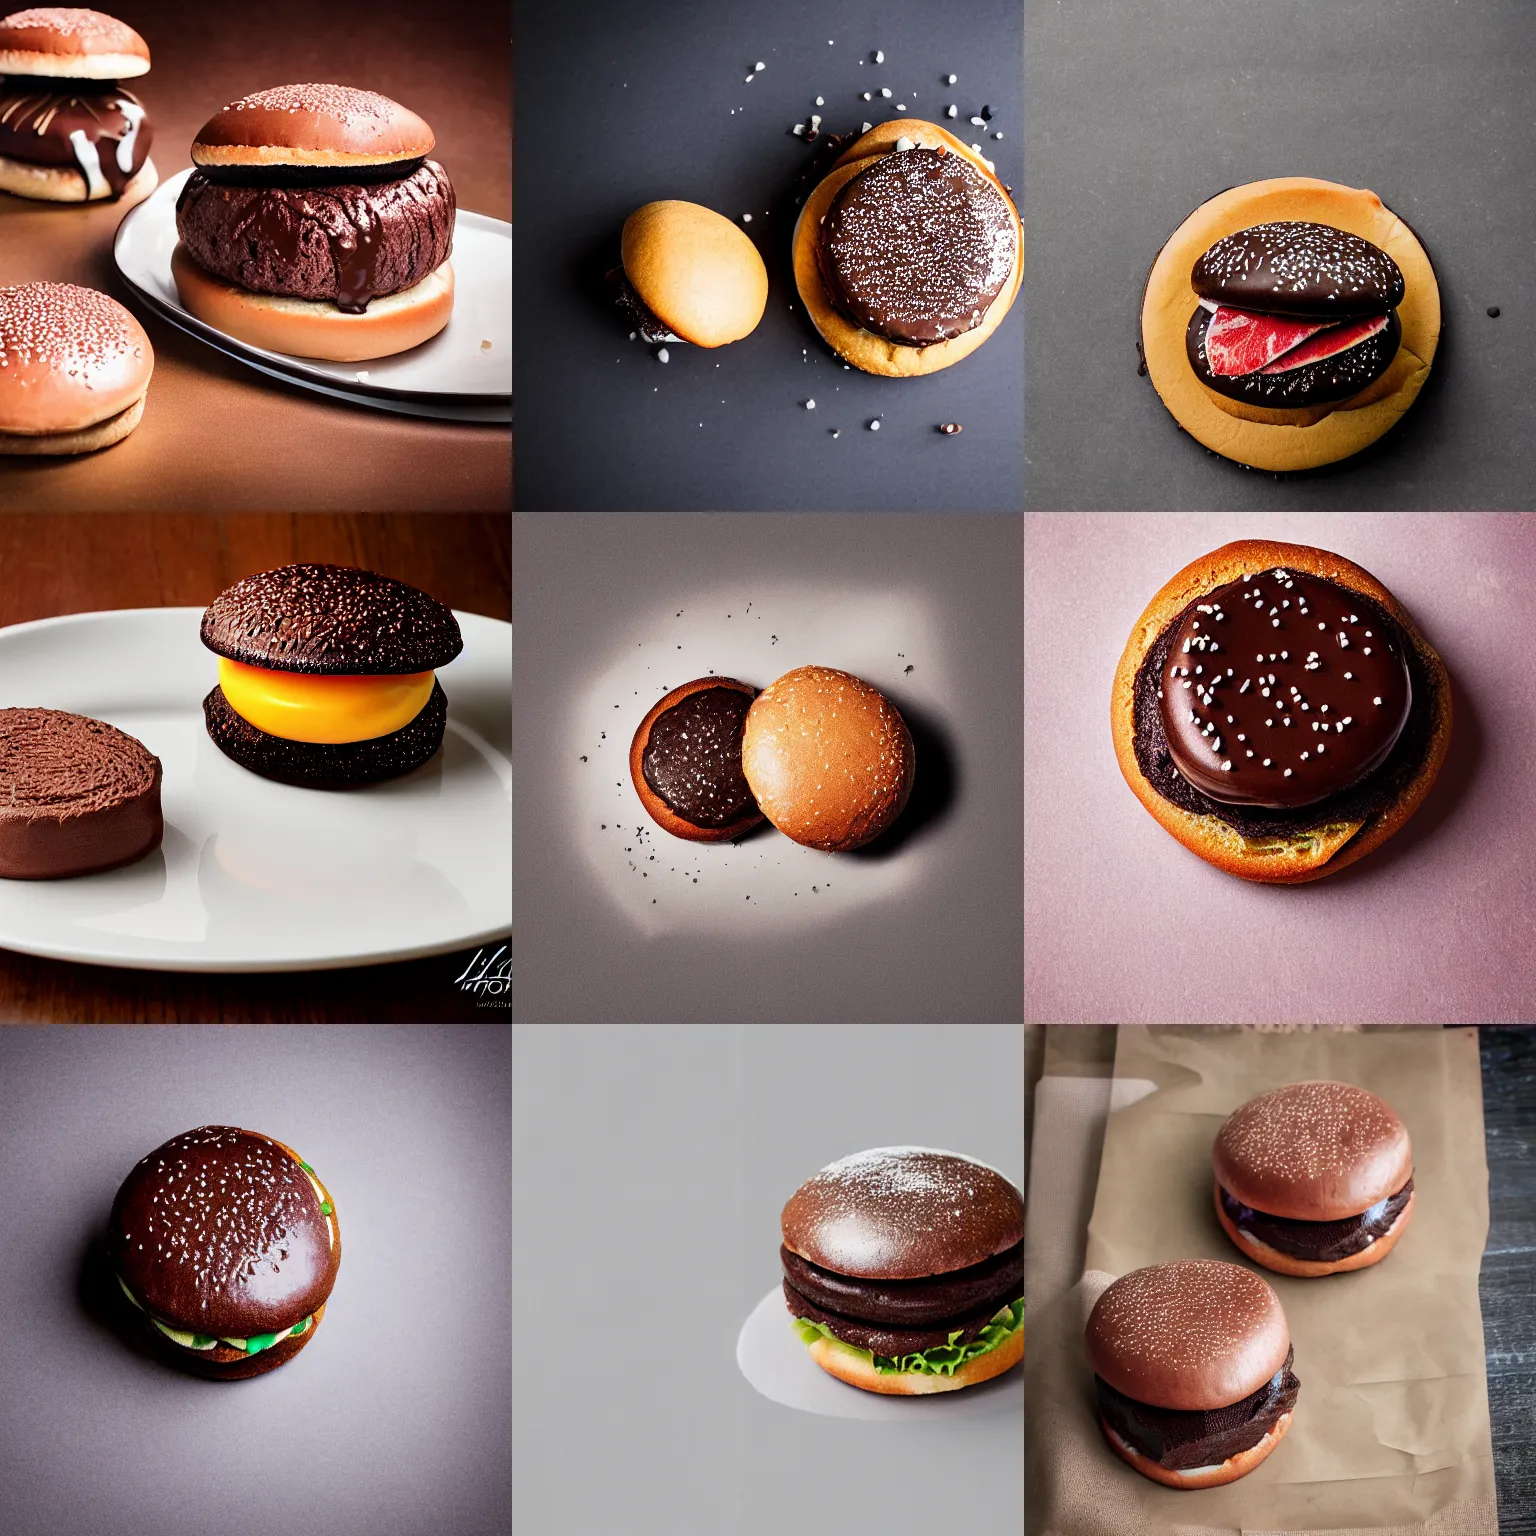 Prompt: chocolate hamburger, food photography, studio lighting